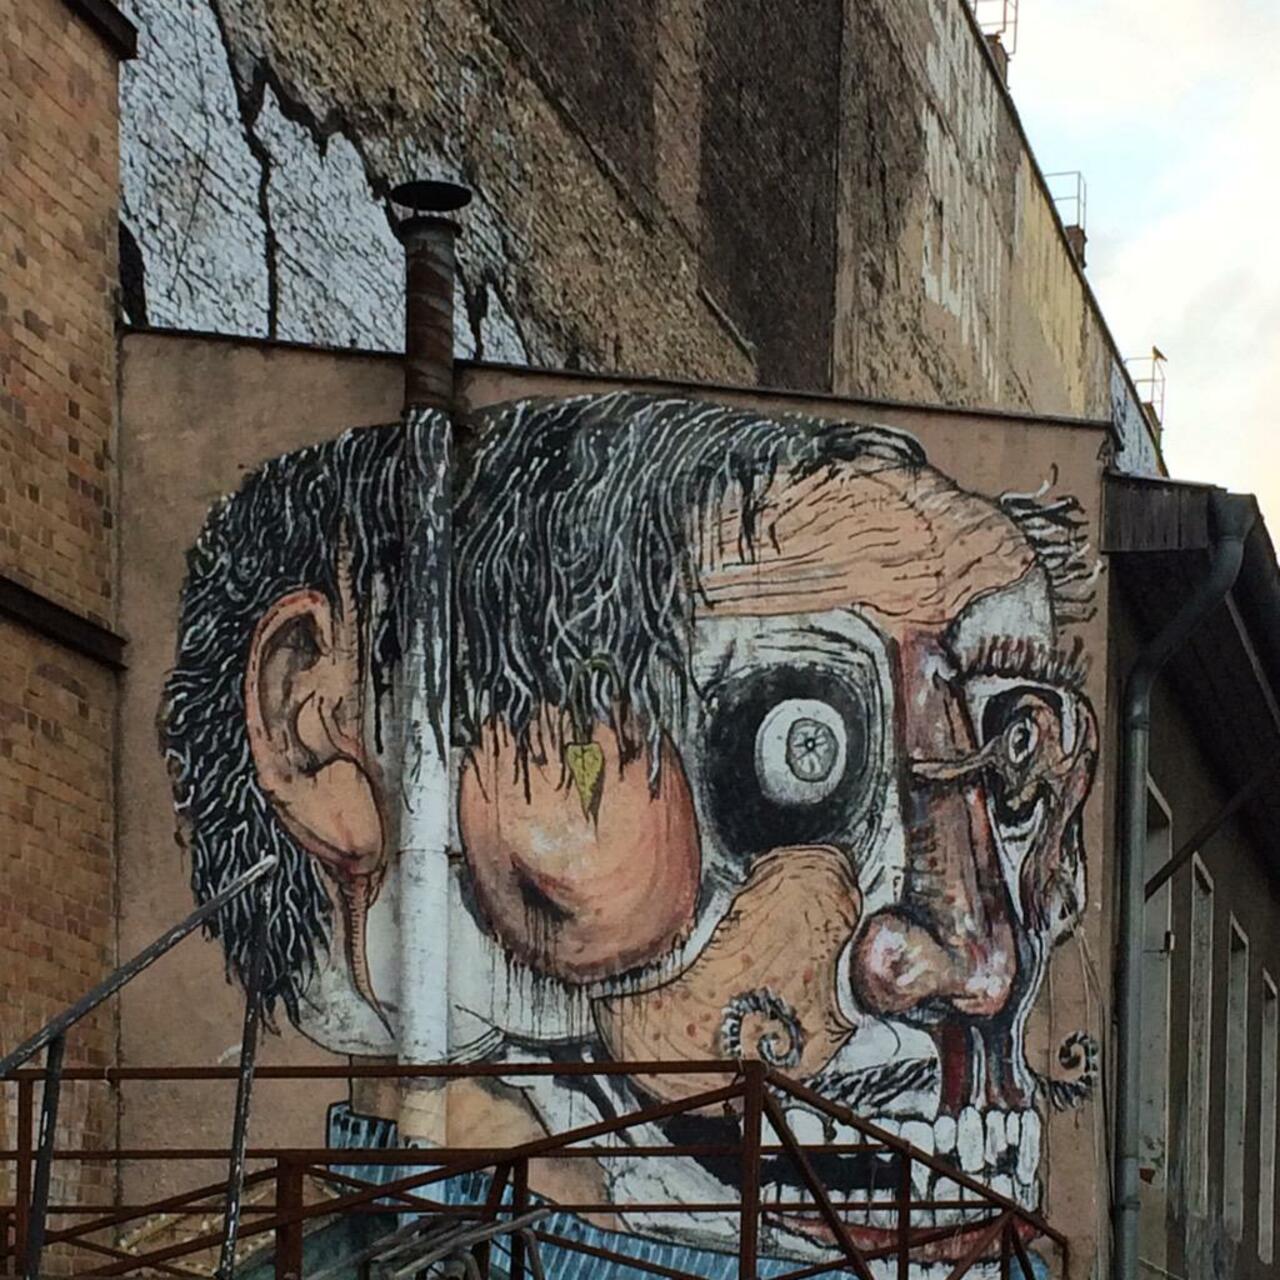 #streetart via @mischaheuer " #Berlin #graffiti #art #urbanart #AltStralau http://t.co/8tgOhYqadT"